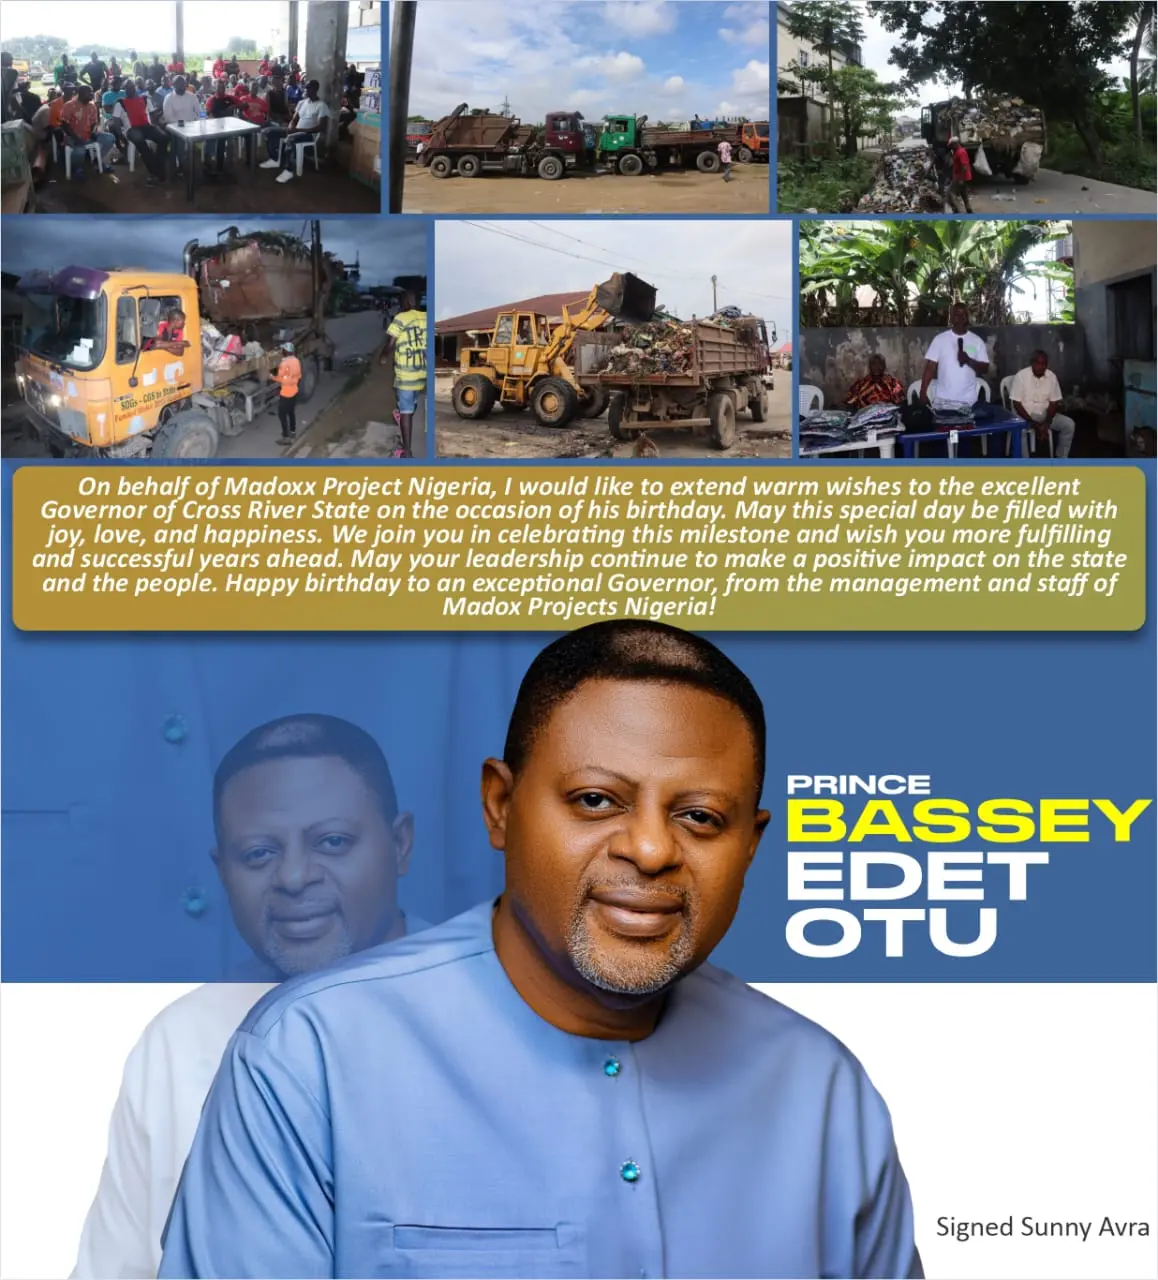 64th Birthday: Madoxx Project Nigeria Celebrates Governor Otu